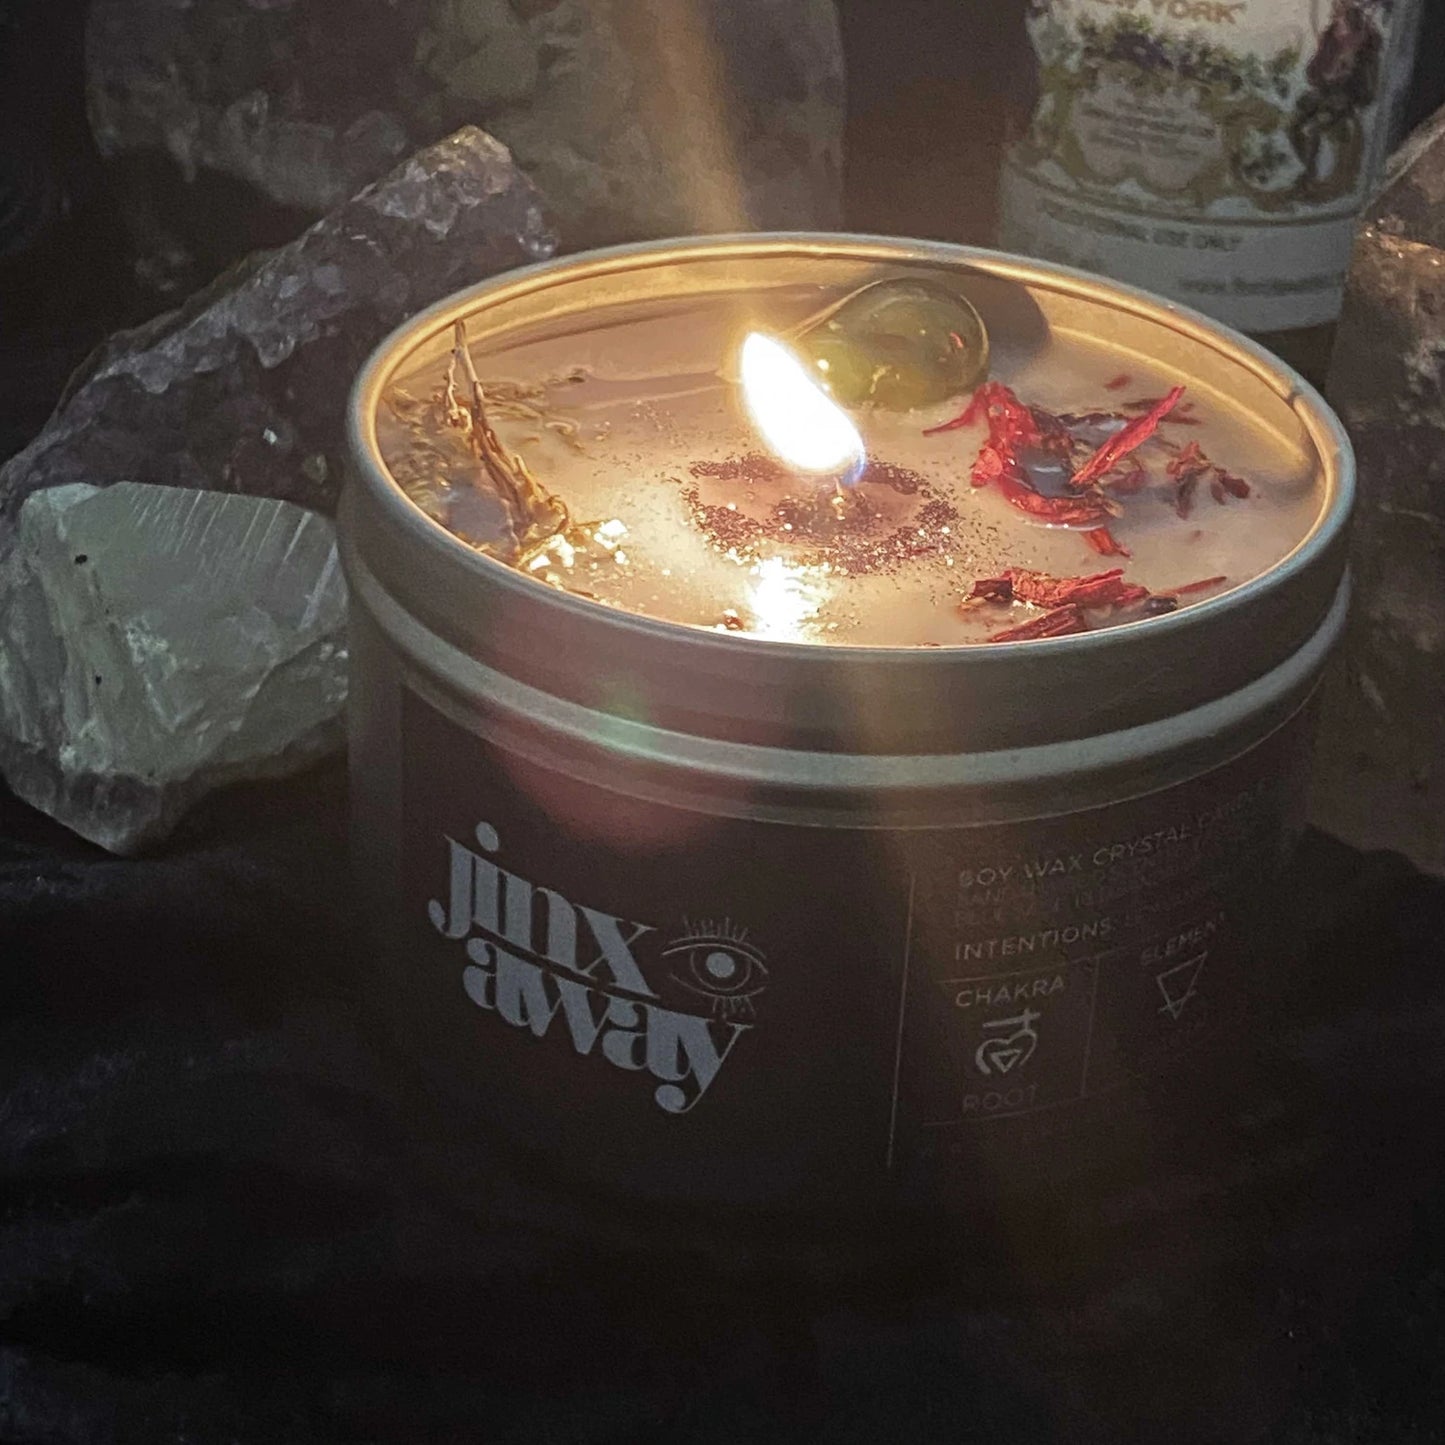 Jinx Away Crystal Candle